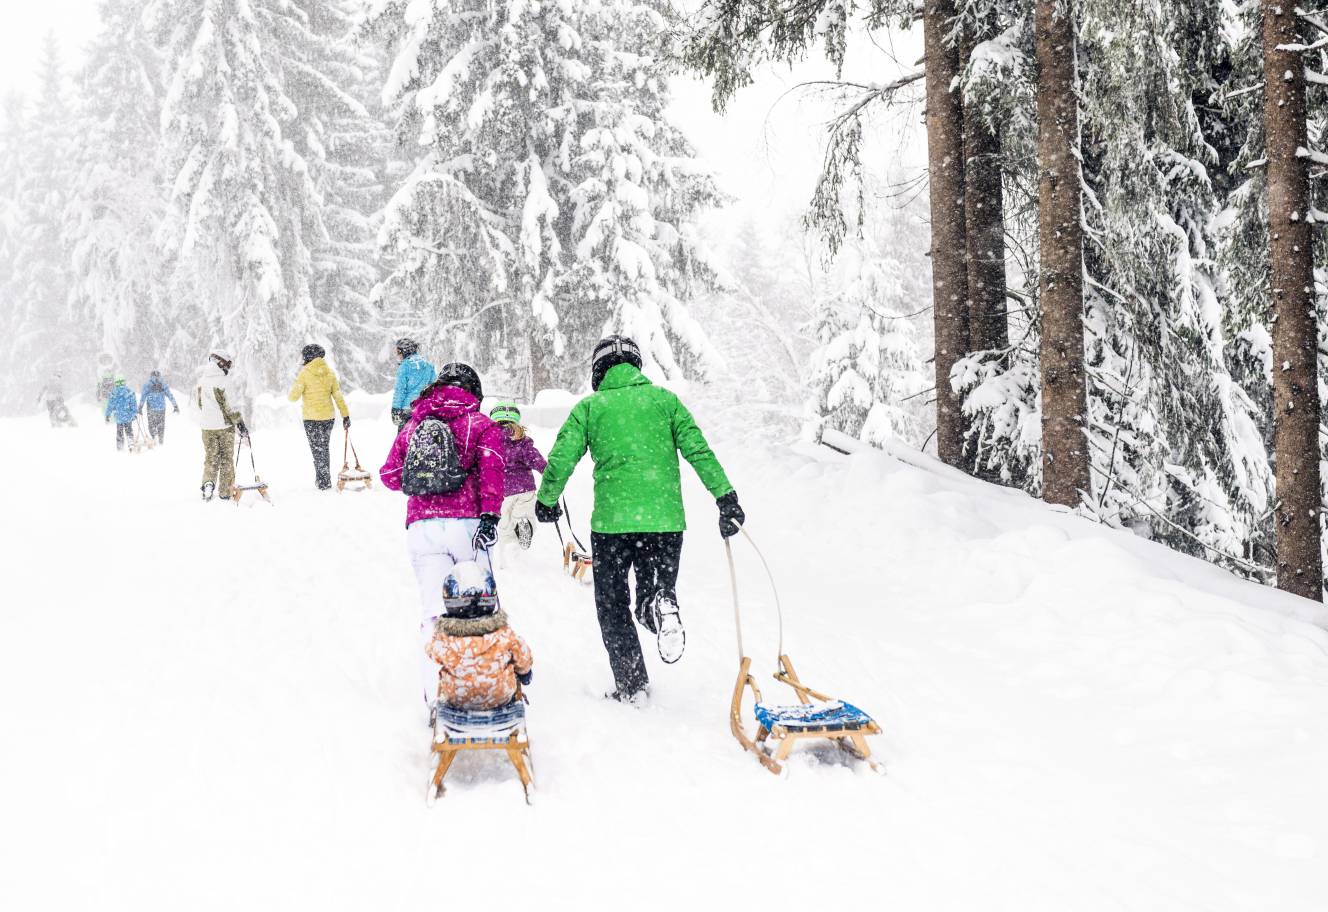 Our children's winter: A Family winter holiday at the Wilder Kaiser - Kaiserhof Ellmau